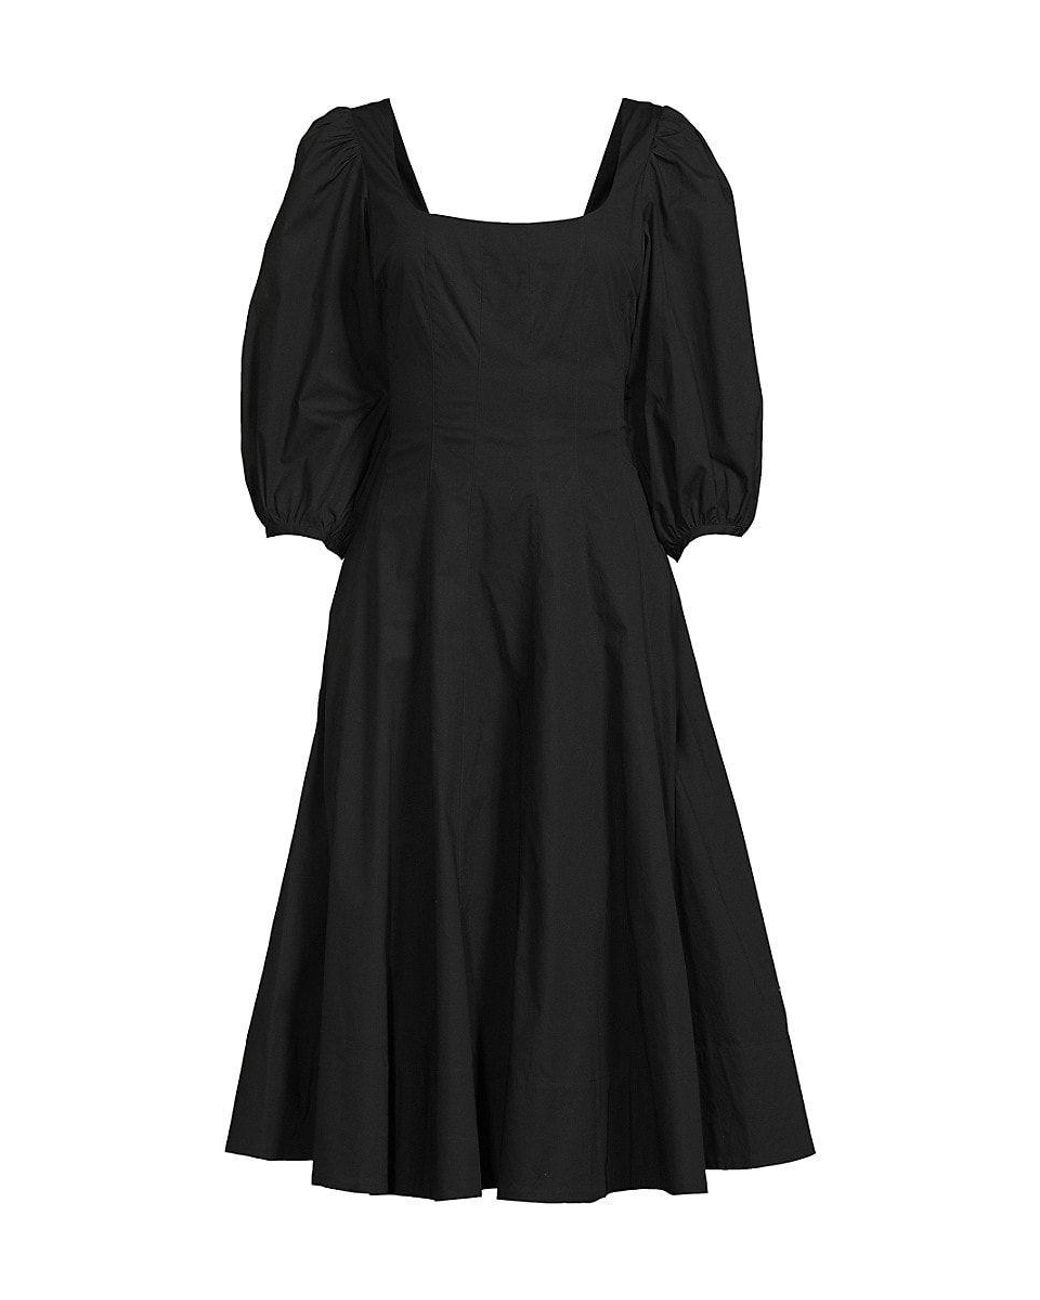 STAUD Ellison Square-Neck Sleeveless Stitched Midi Dress